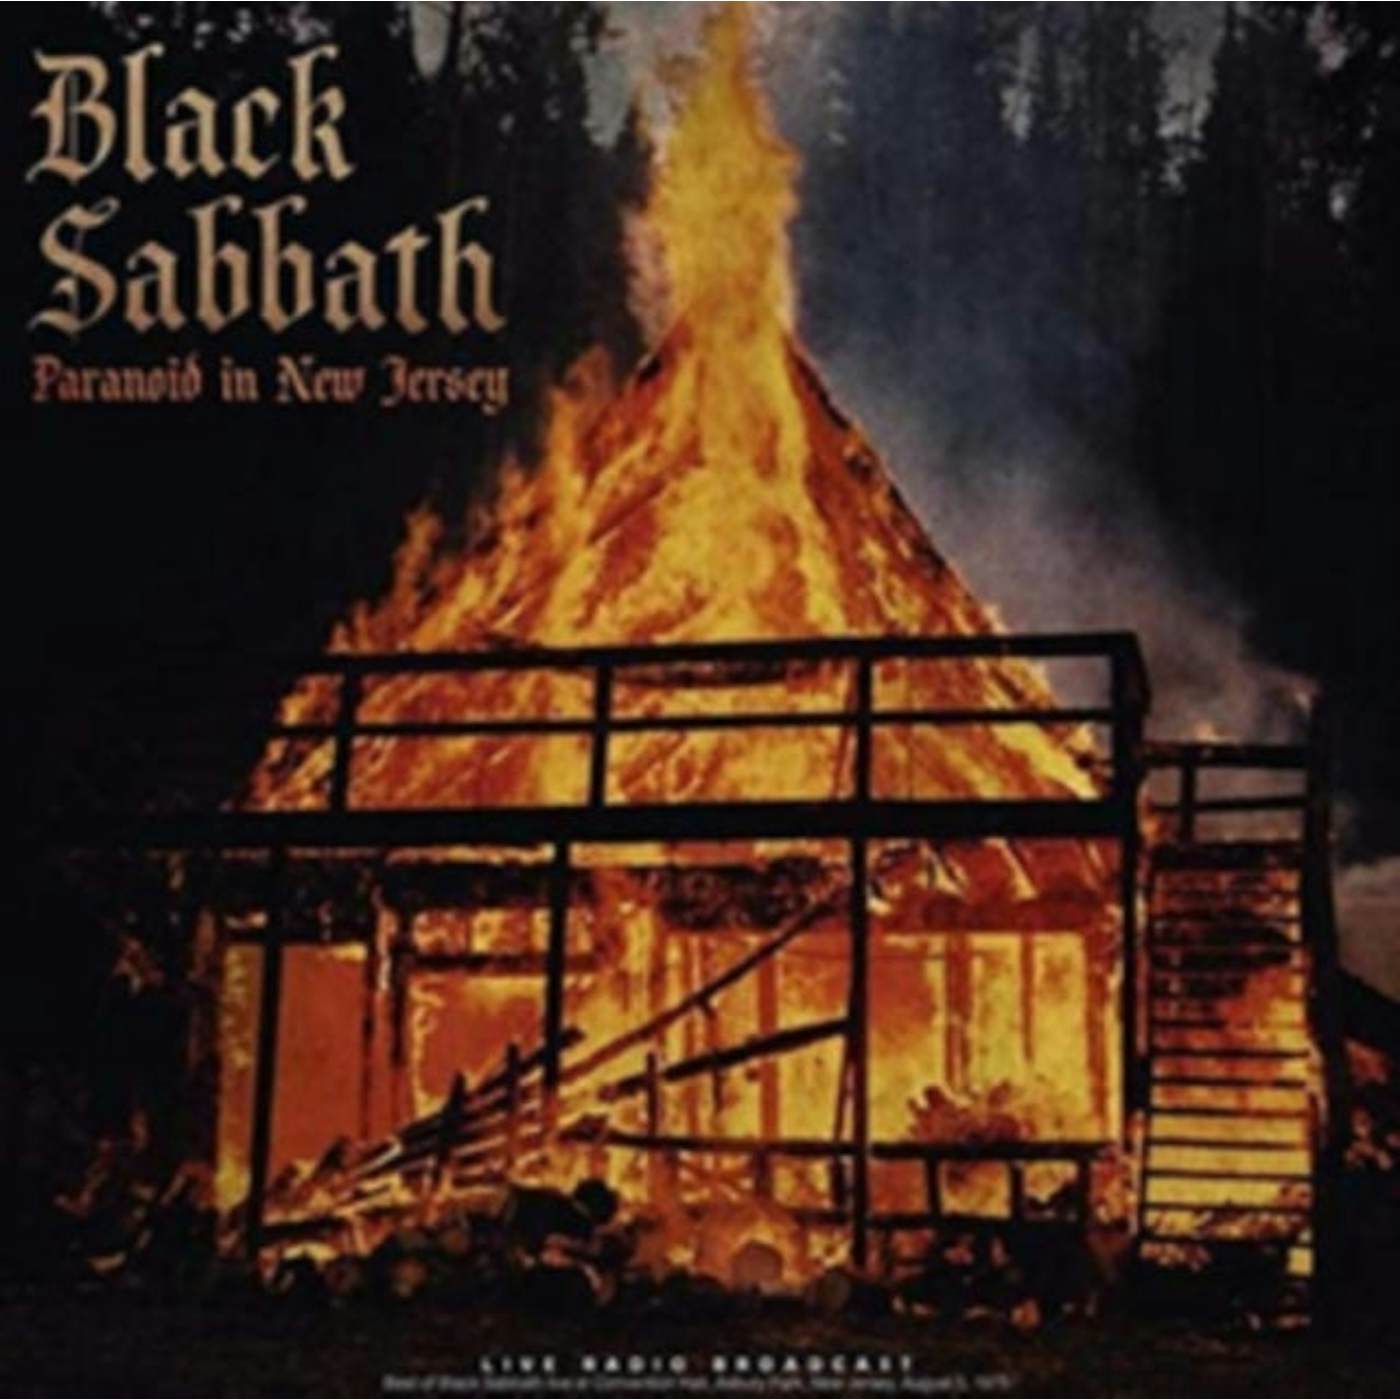 Black Sabbath LP Vinyl Record - Paranoid In New Jersey